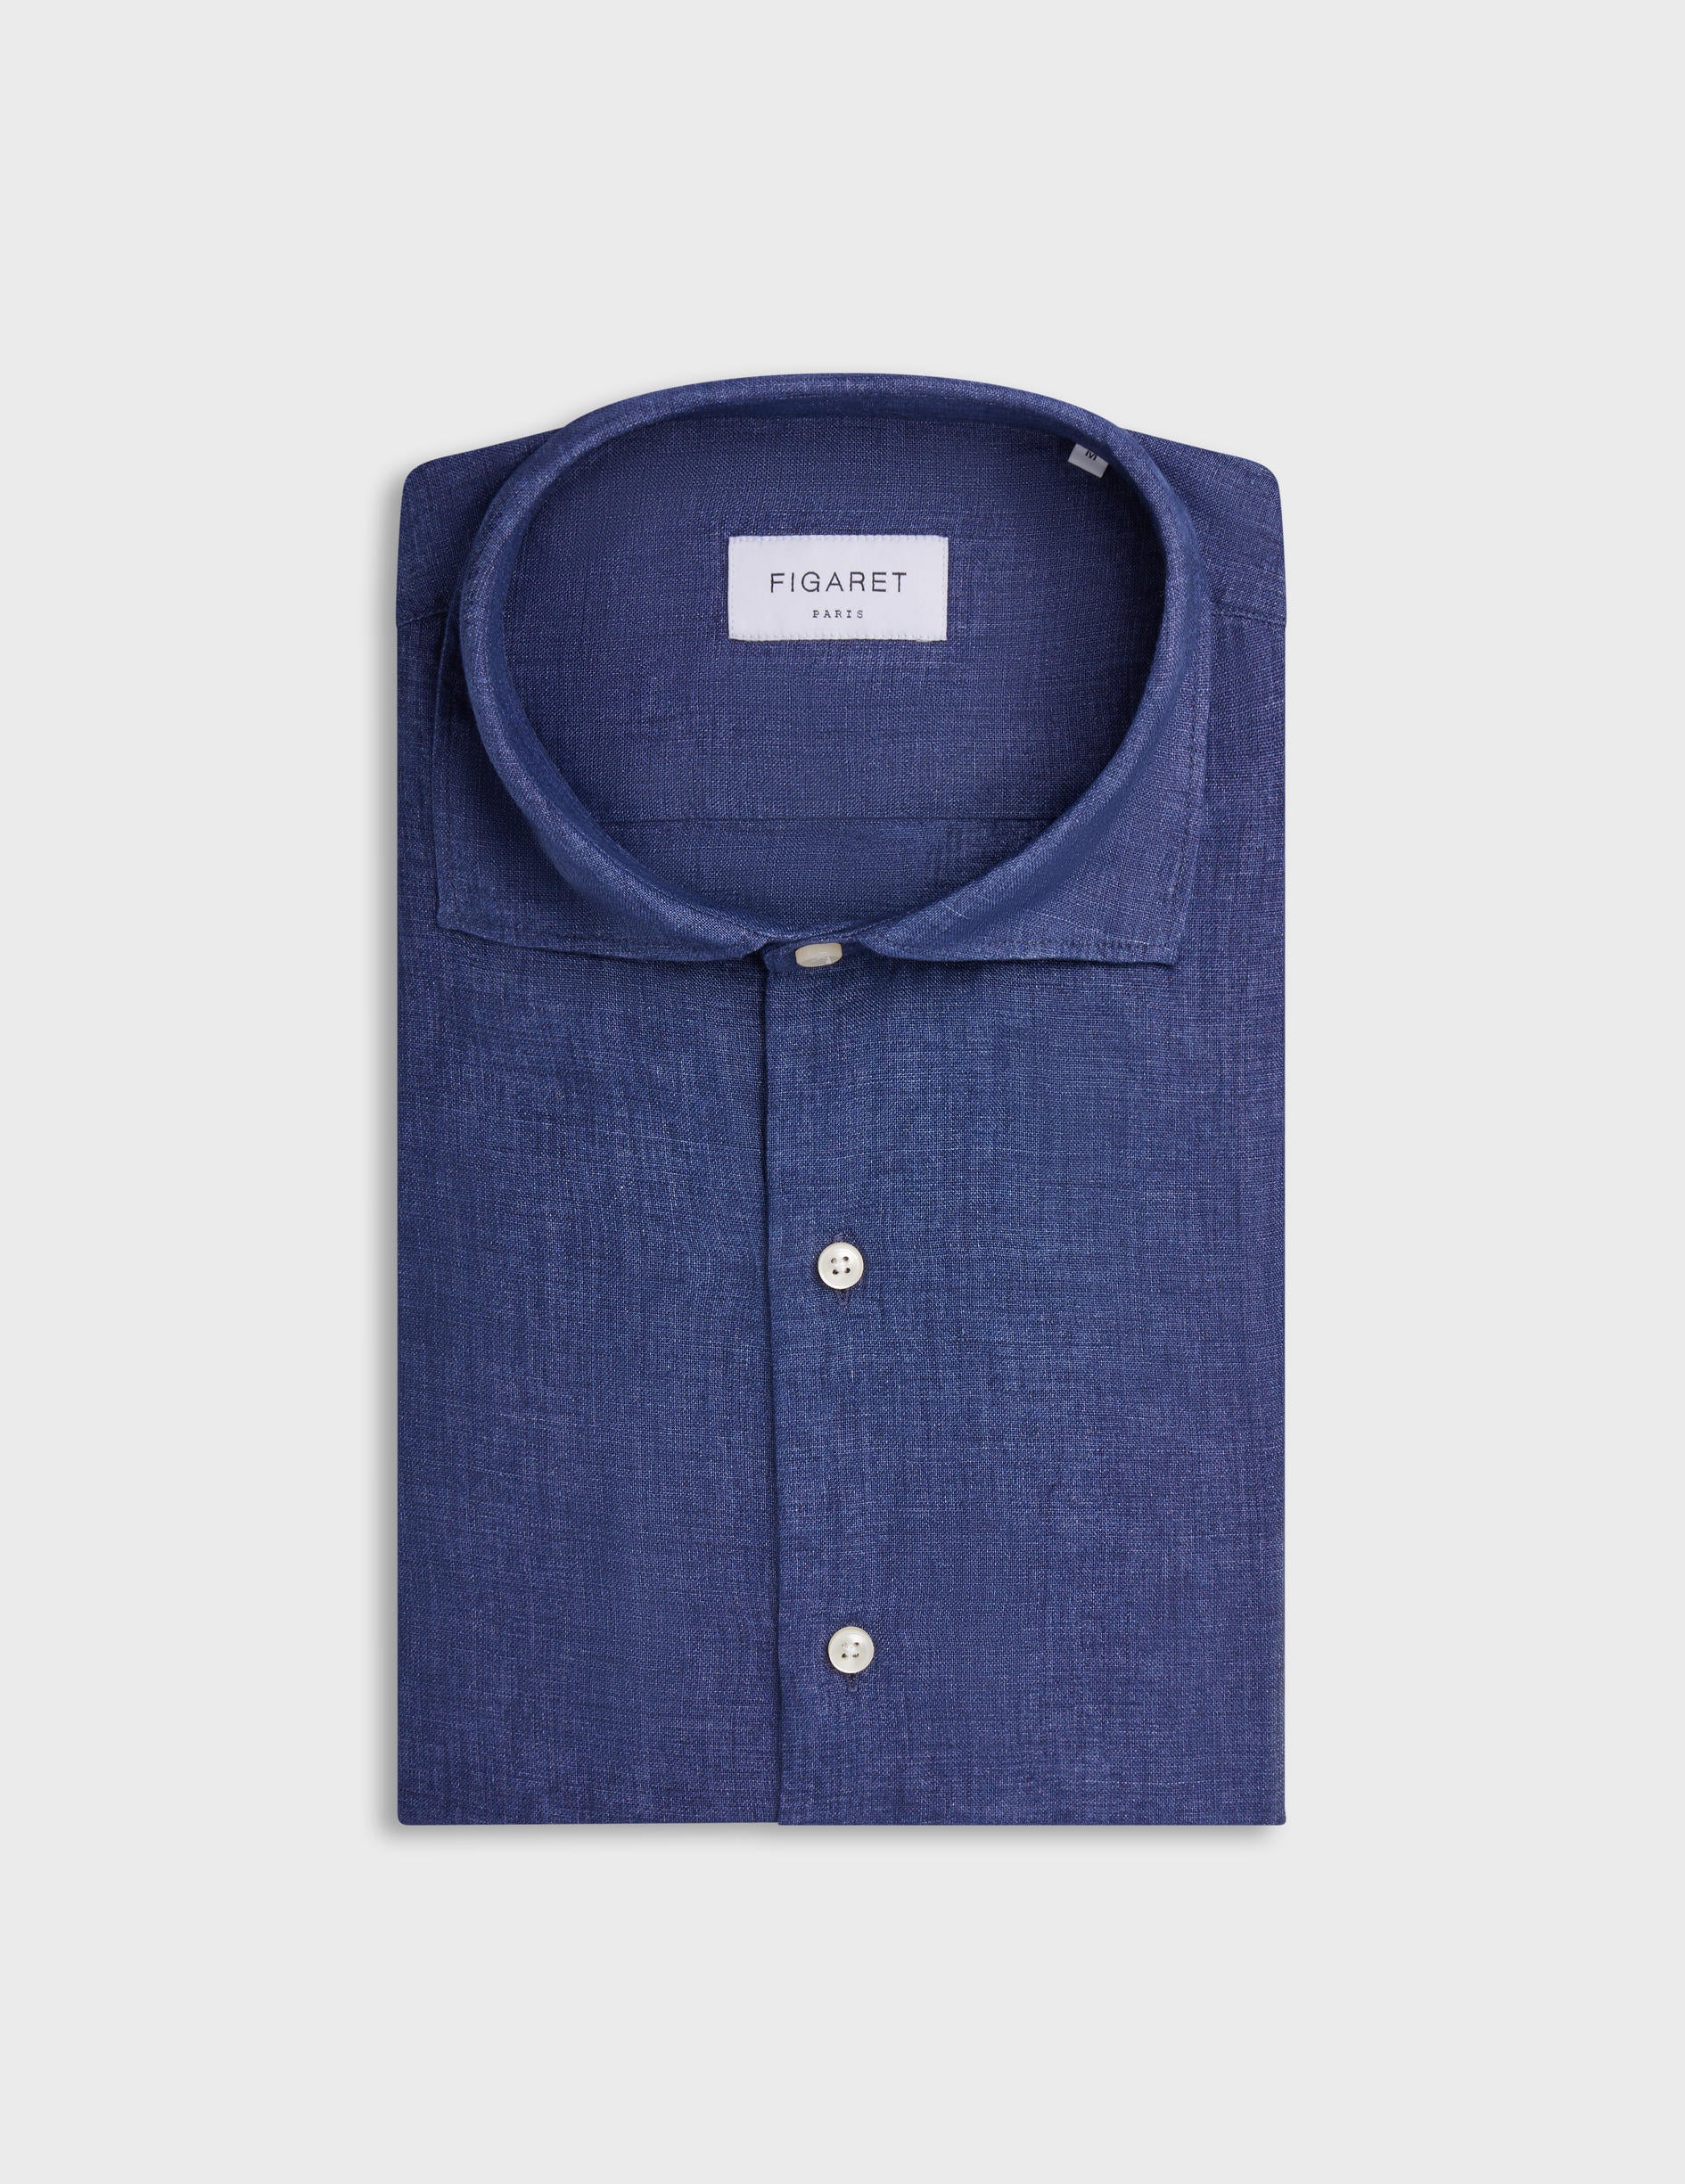 Aristote shirt in dark blue linen - Linen - Italian Collar